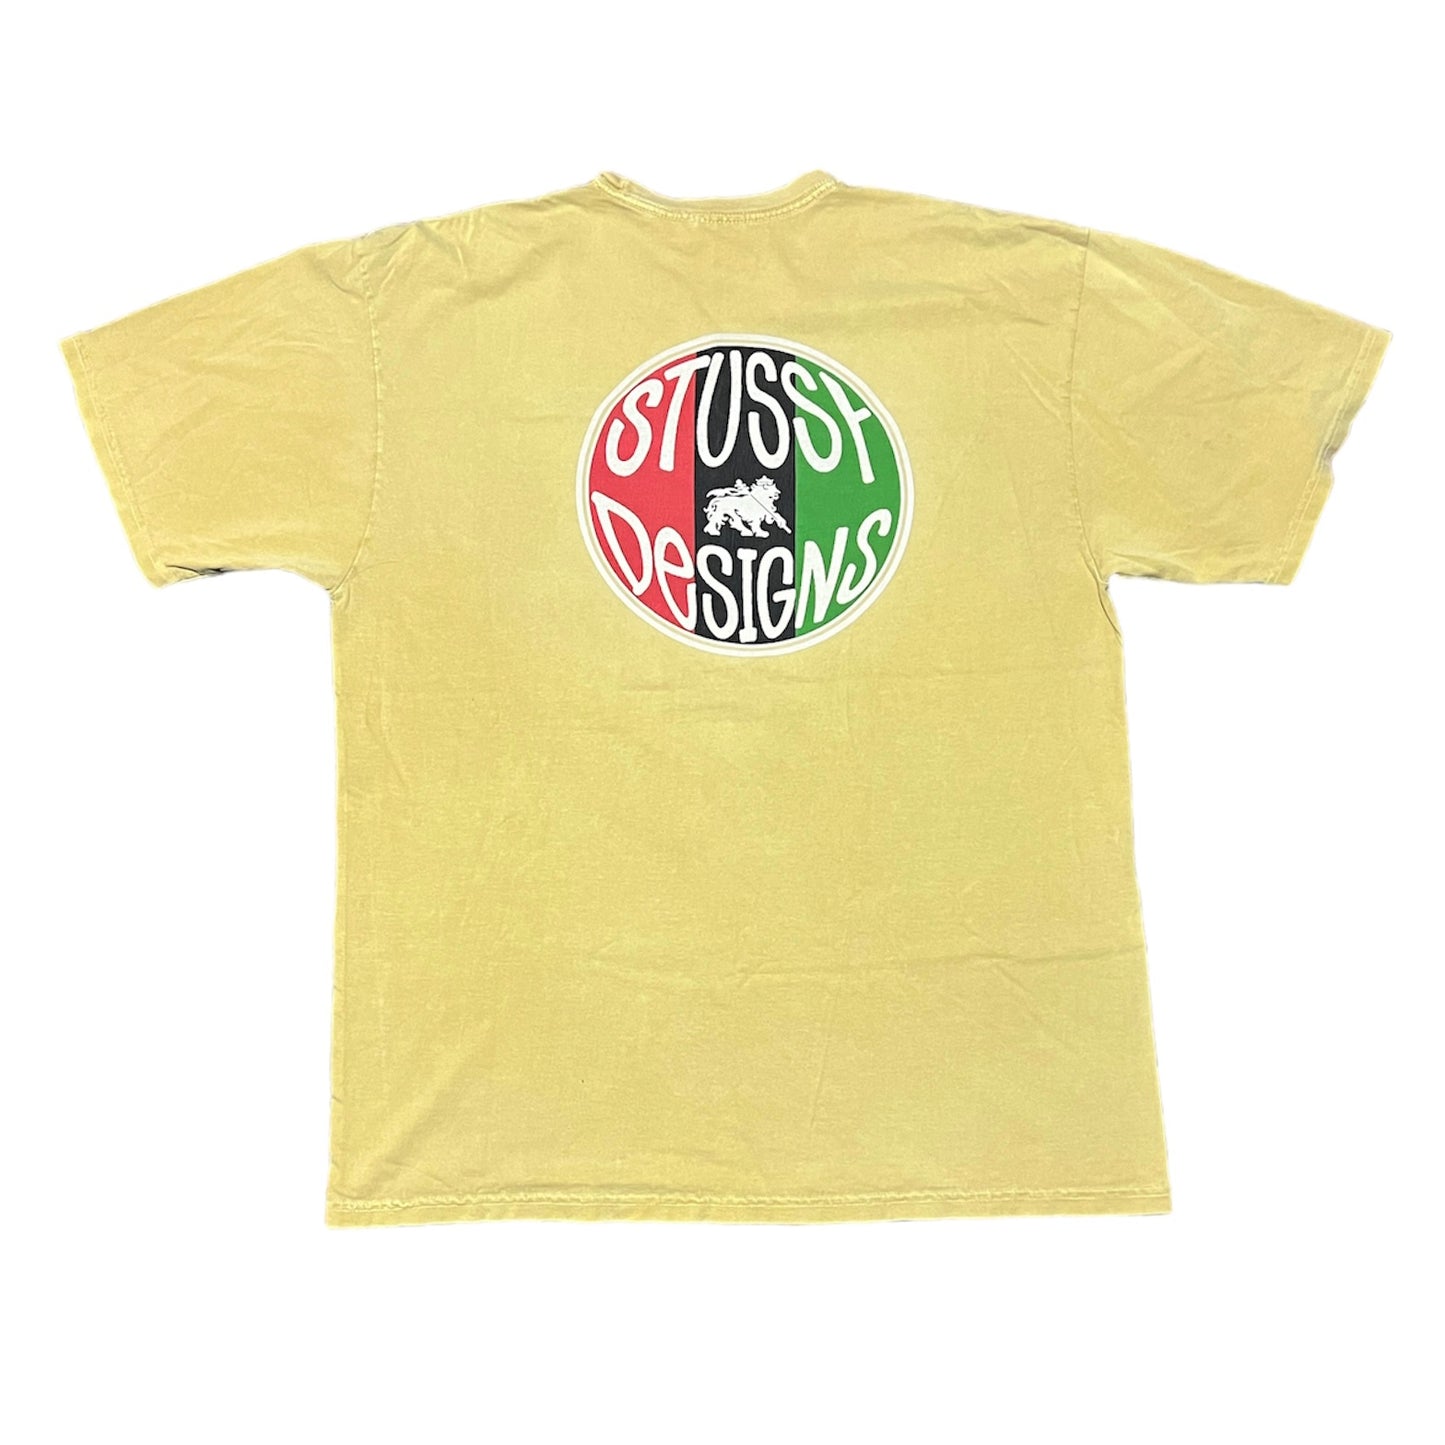 Stussy Design T-Shirt Size X-Large